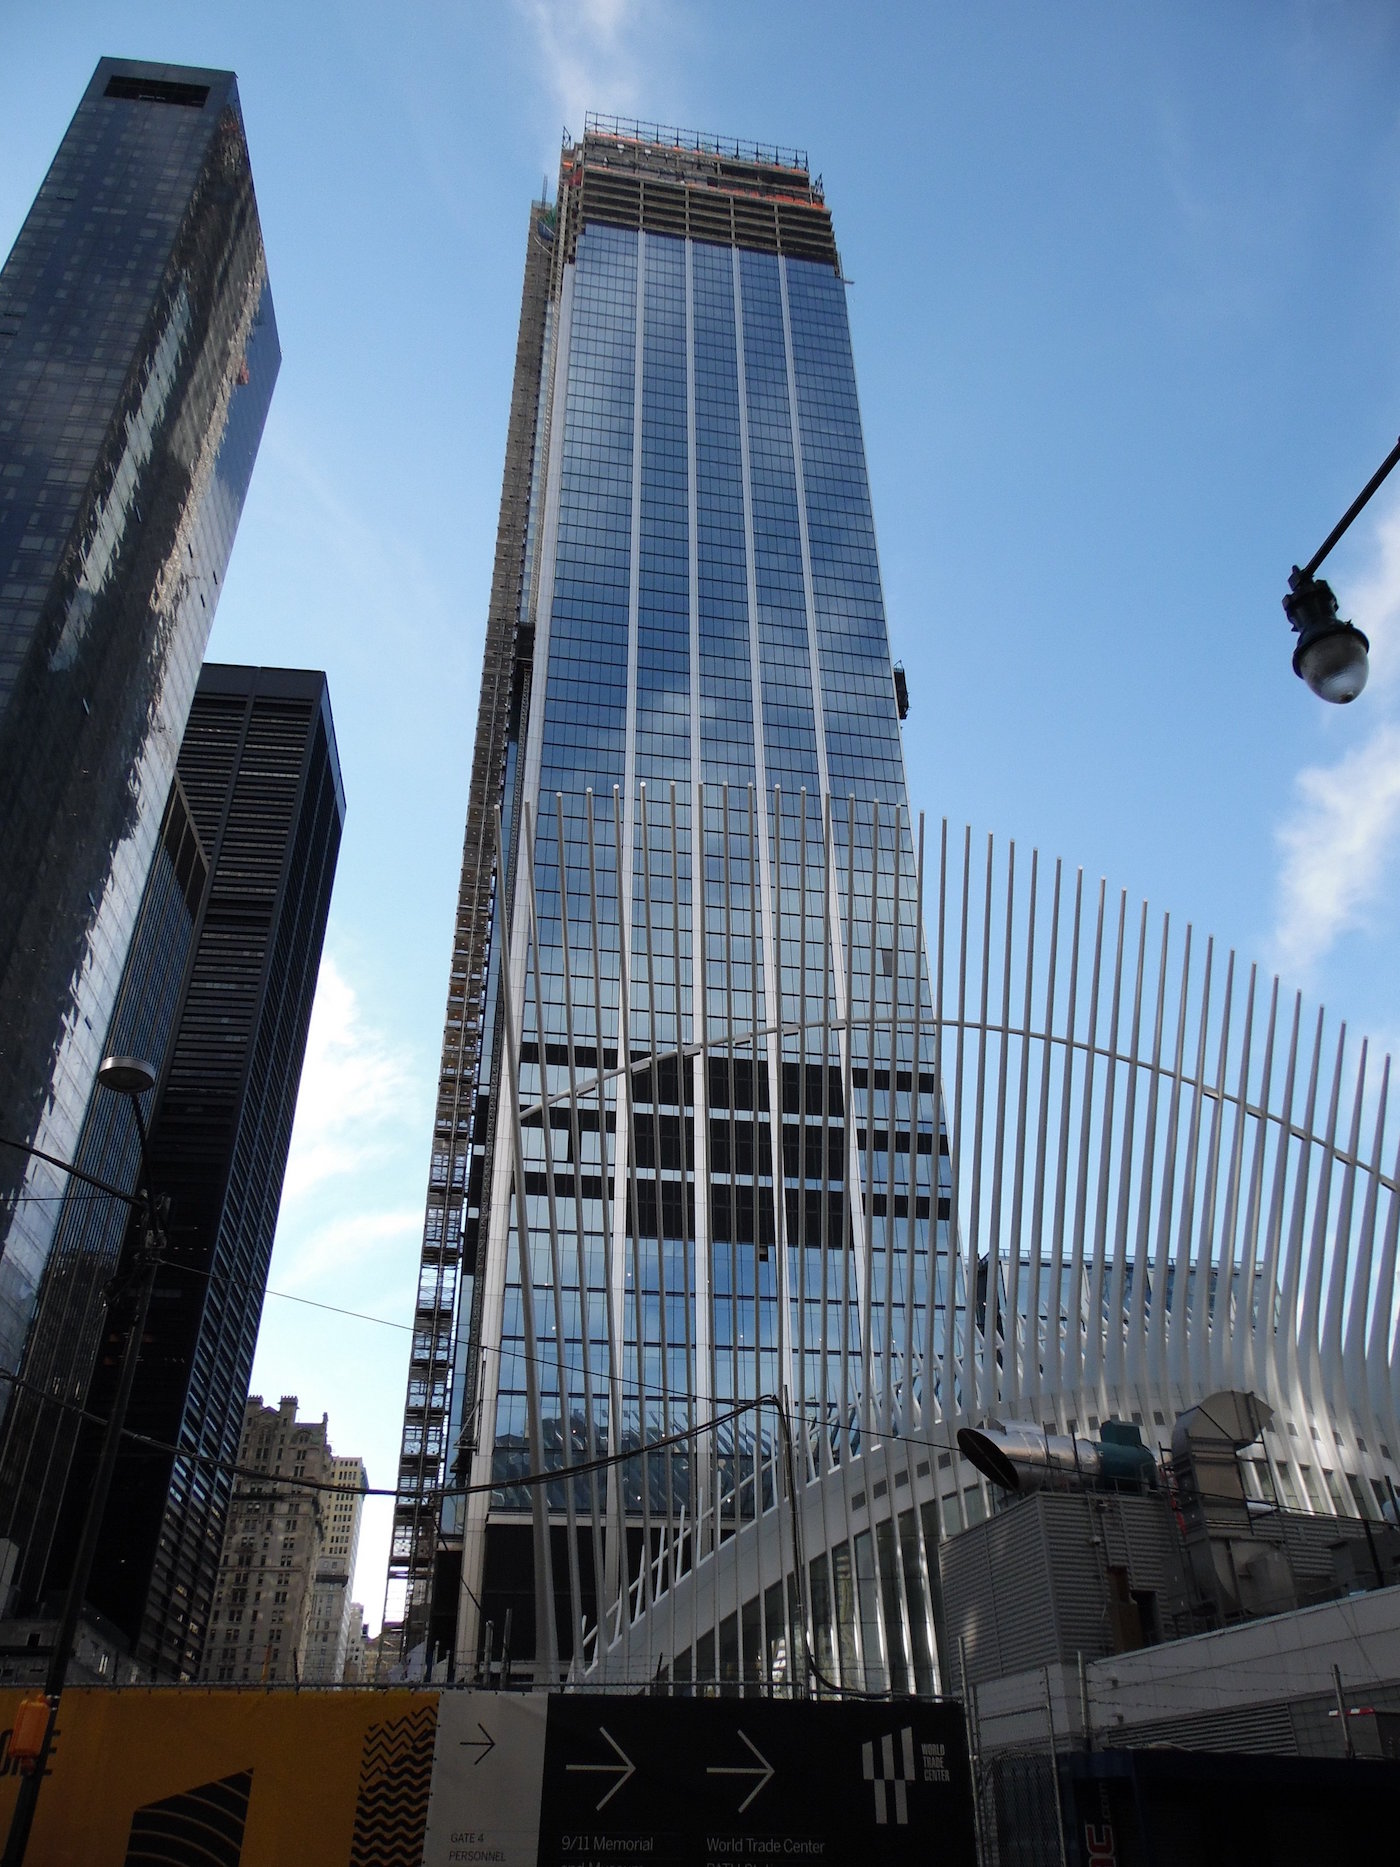 Photos Capture Three World Trade Center's Progression | SkyriseCities